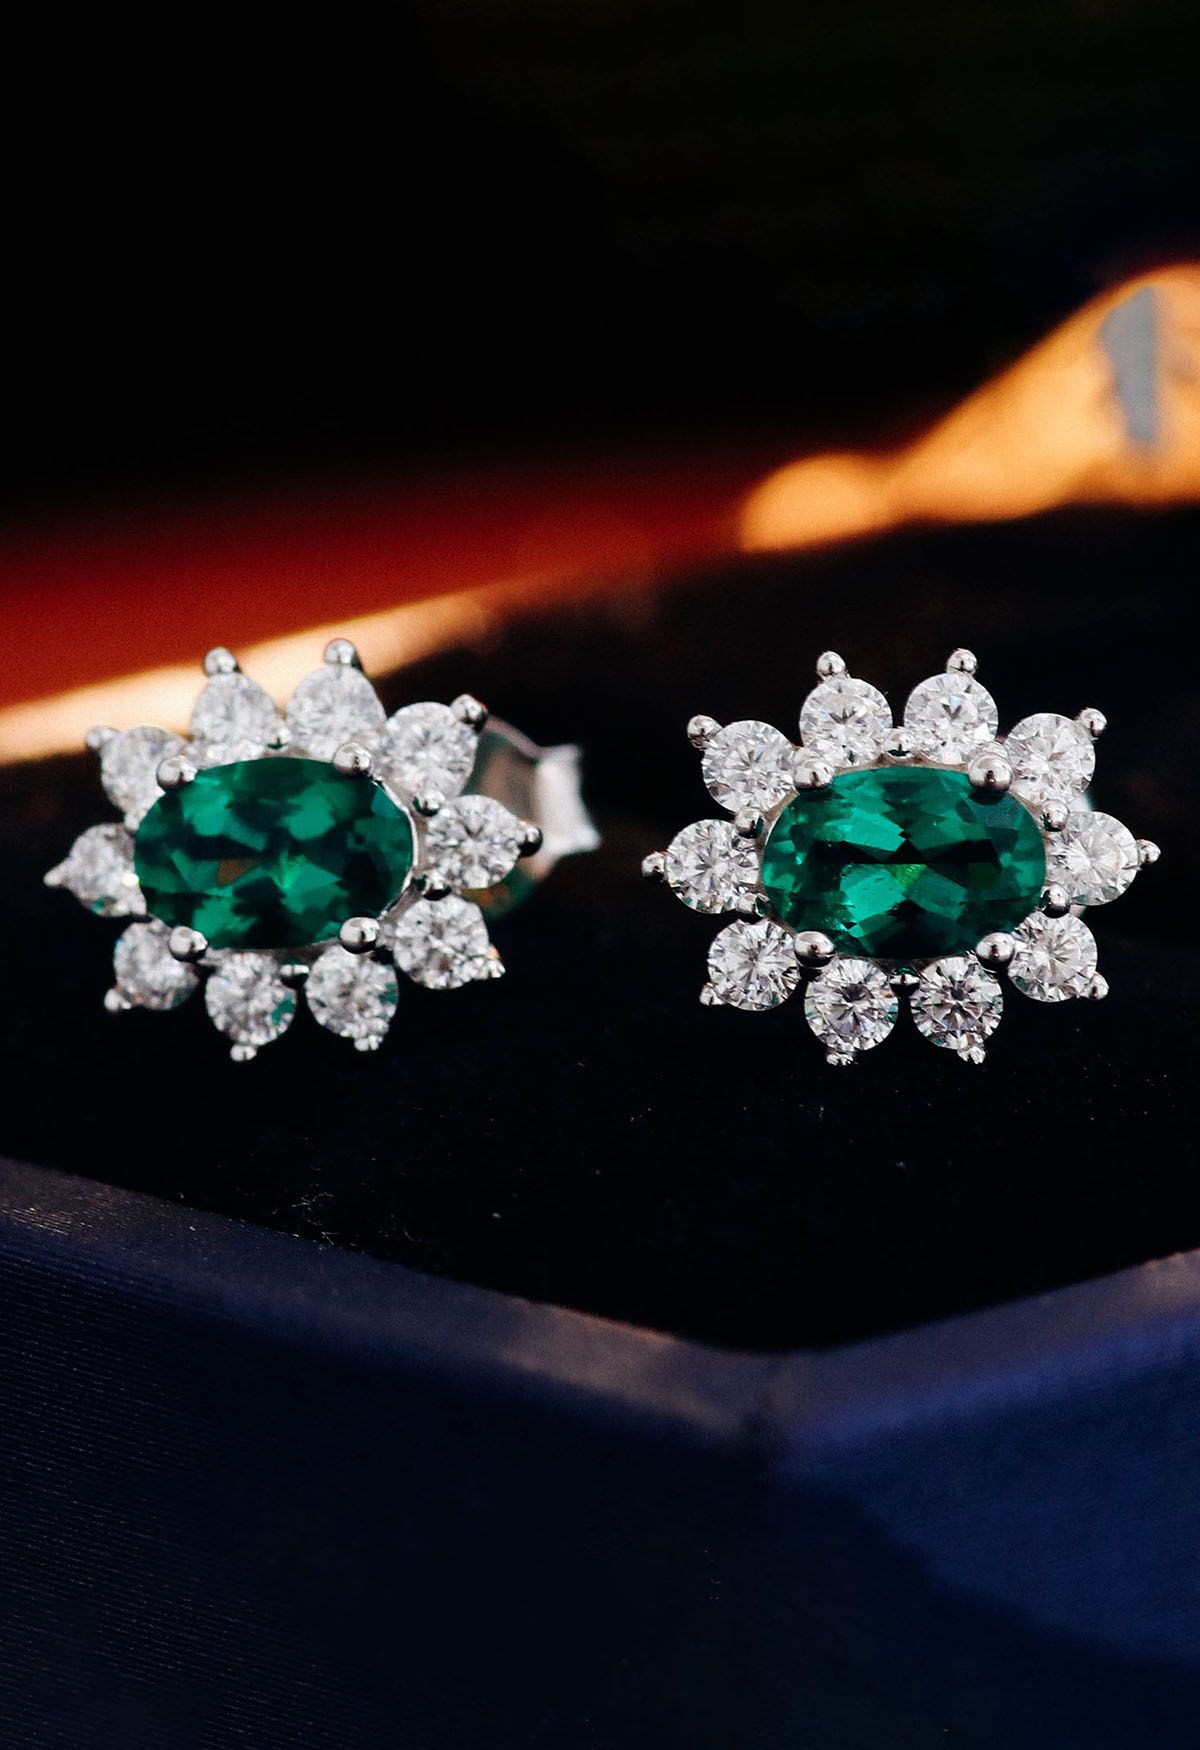 Floral Oval Emerald Gem Stud Earrings